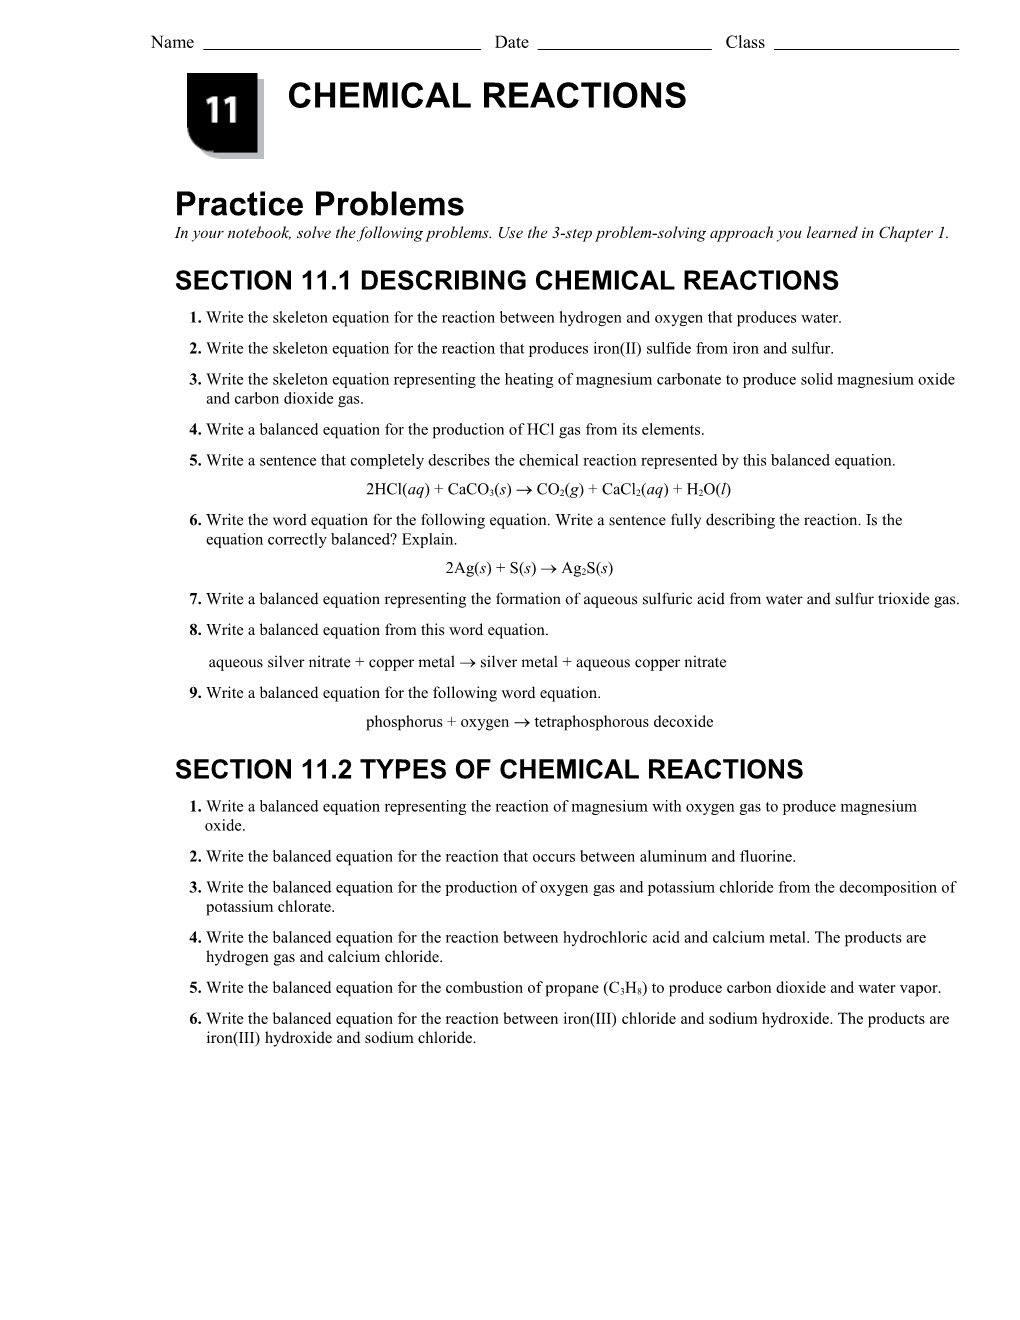 Section 11.1 Describing Chemical Reactions